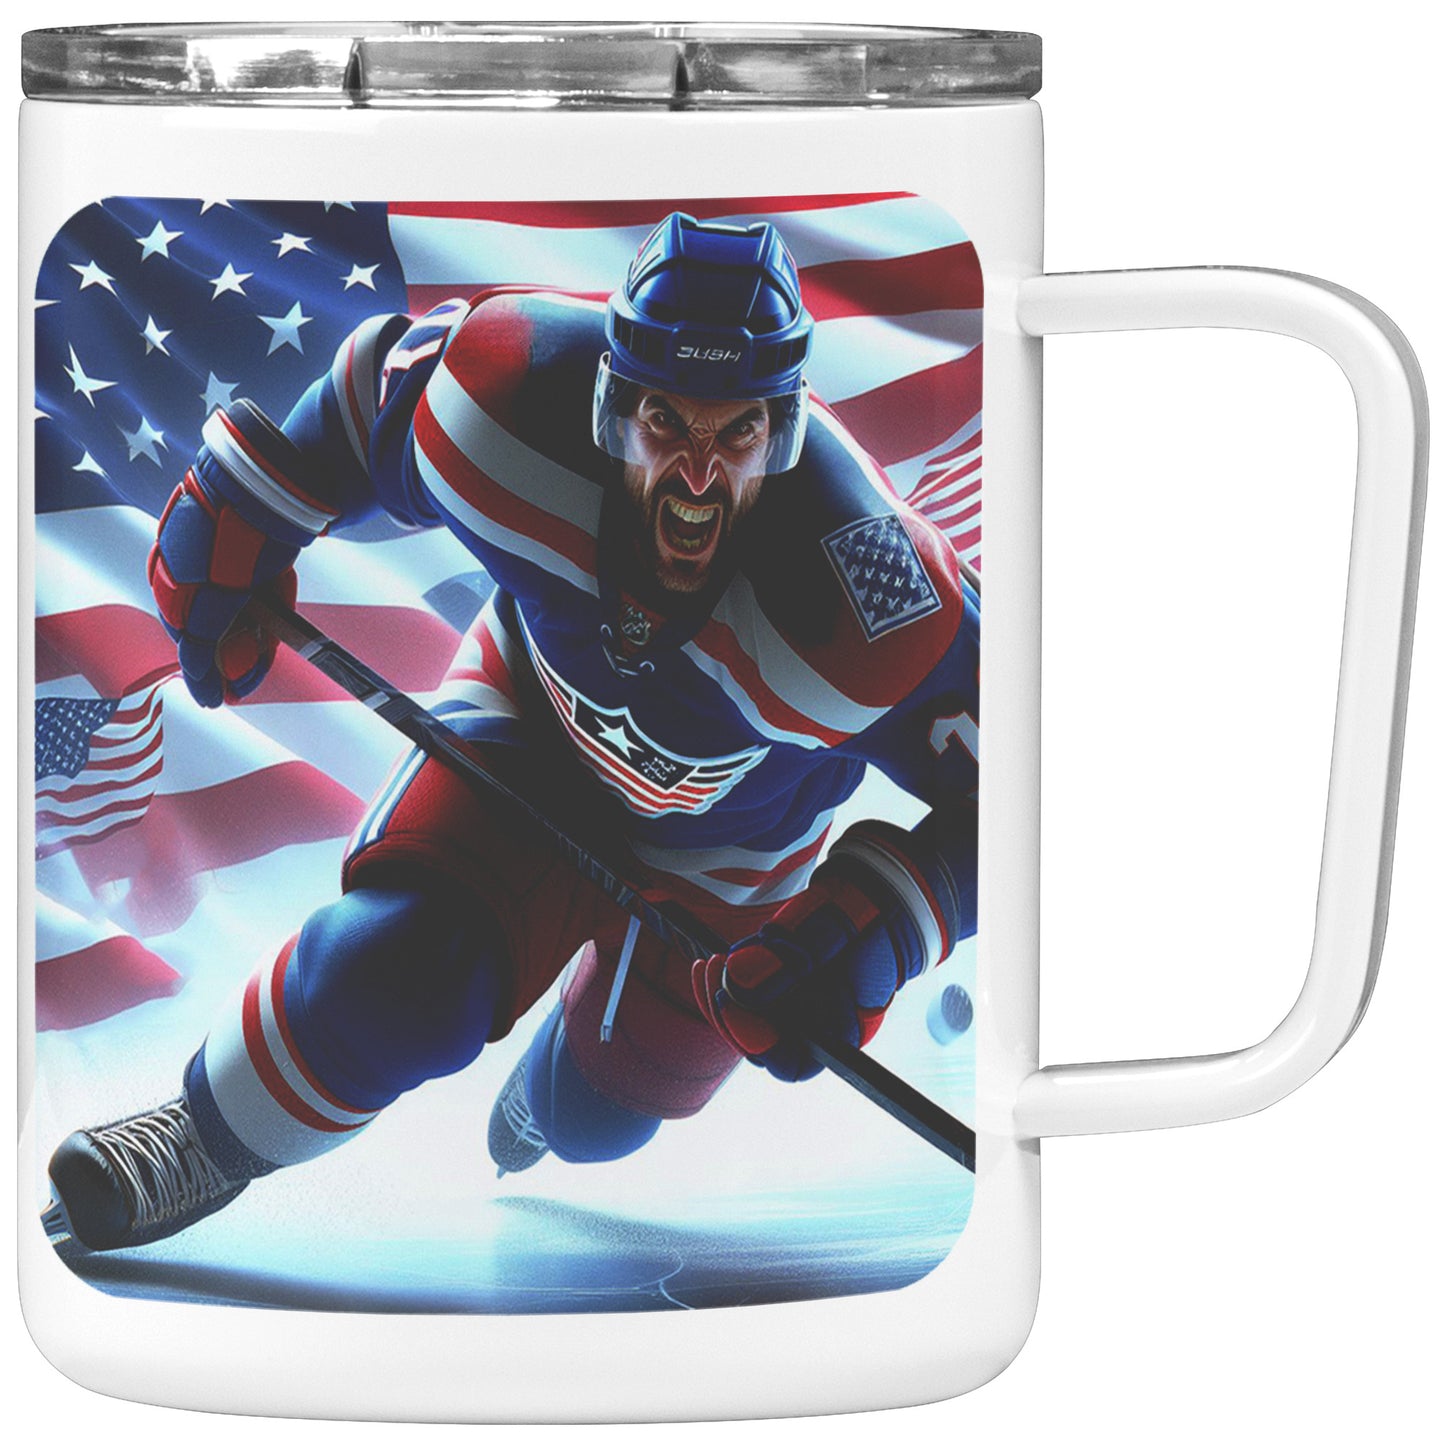 Man Ice Hockey Player - Coffee Mug #15